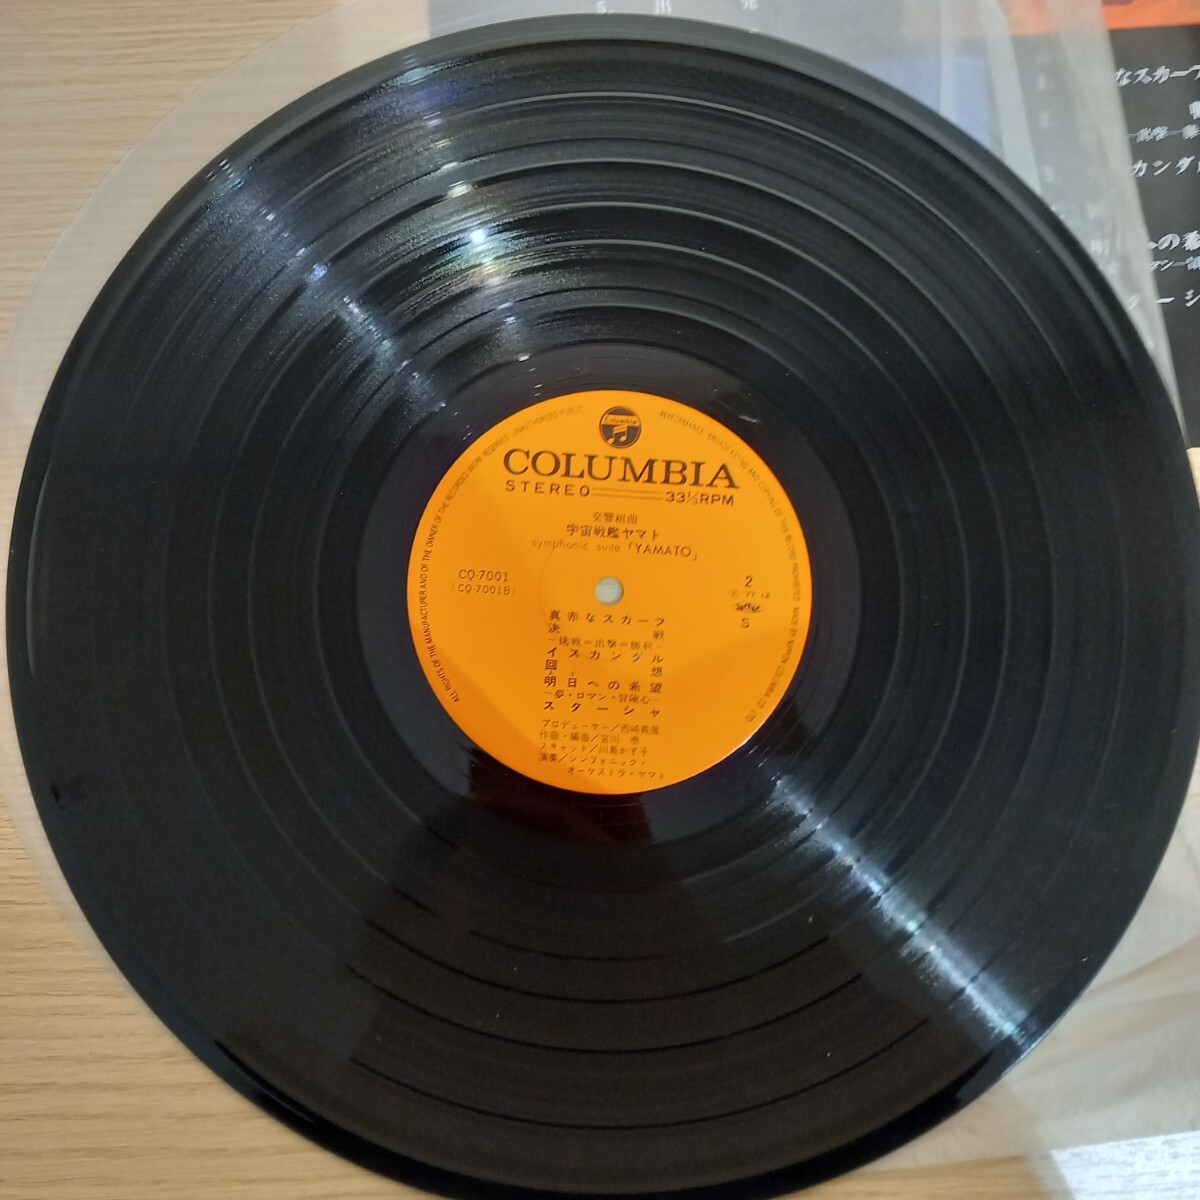 N4981 ヤマト交響組曲 帯付き 帯 LP レコード LPレコード LP盤 昭和レトロ 1枚 シティポップ ポップス フォーク 歌謡曲 邦楽 送料510円の画像5